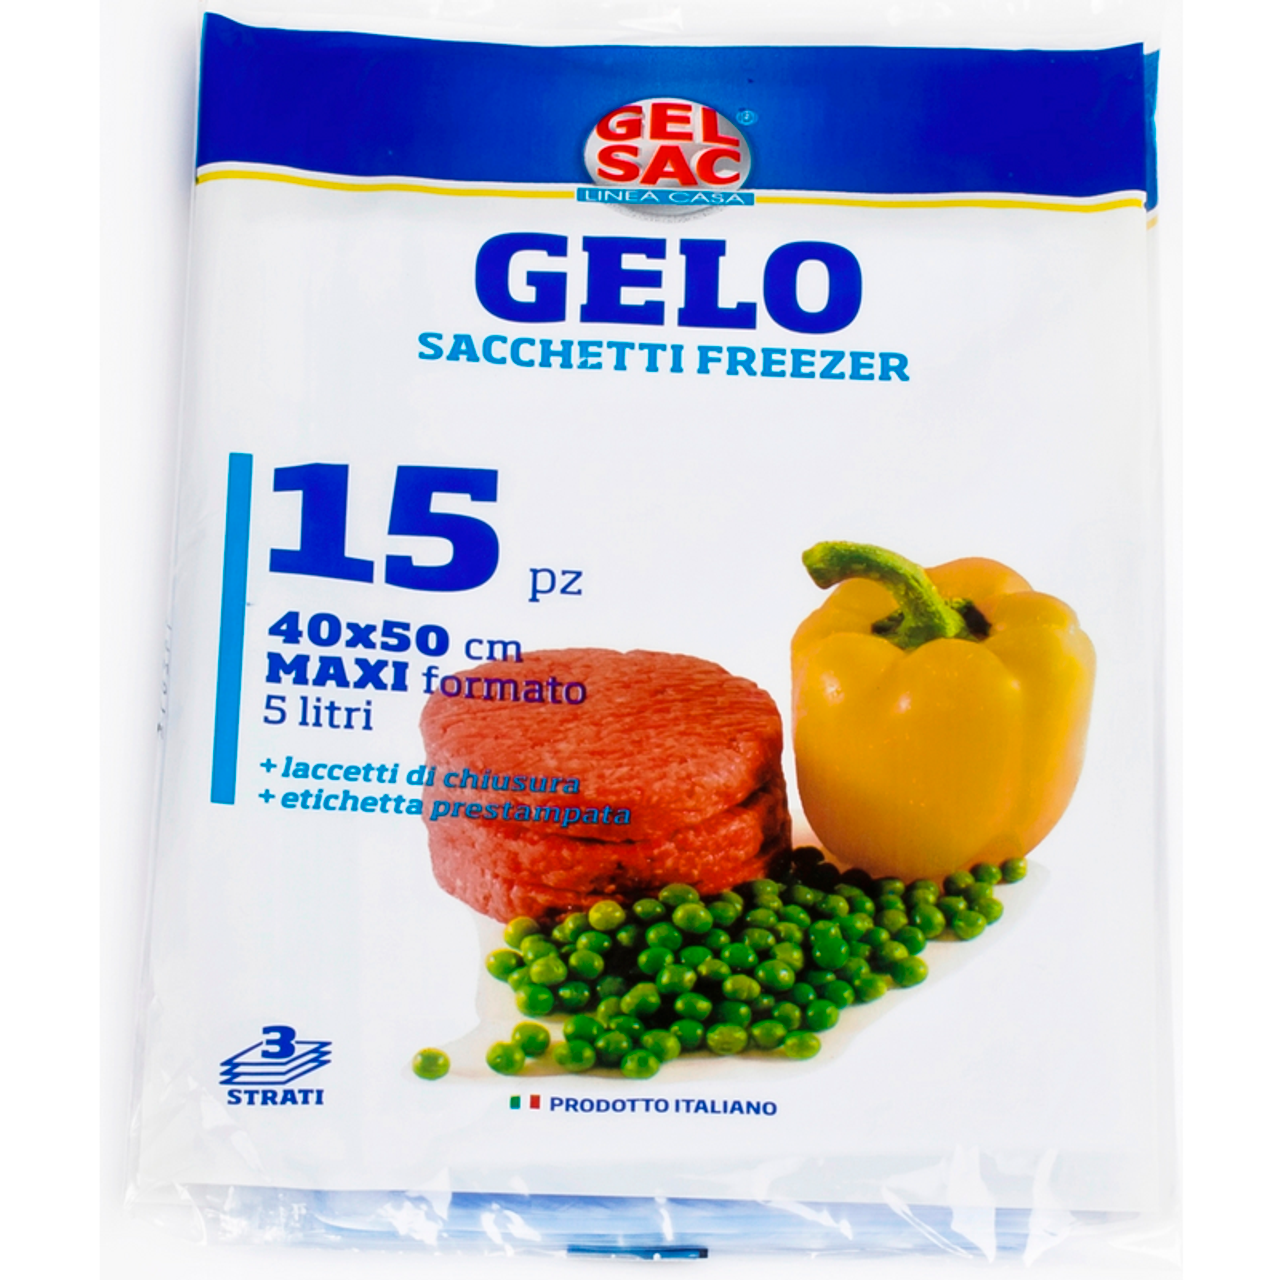 GEL SAC SACCHI GELO FREEZER 40x50 BUSTA 15 PZ - Meloni Store